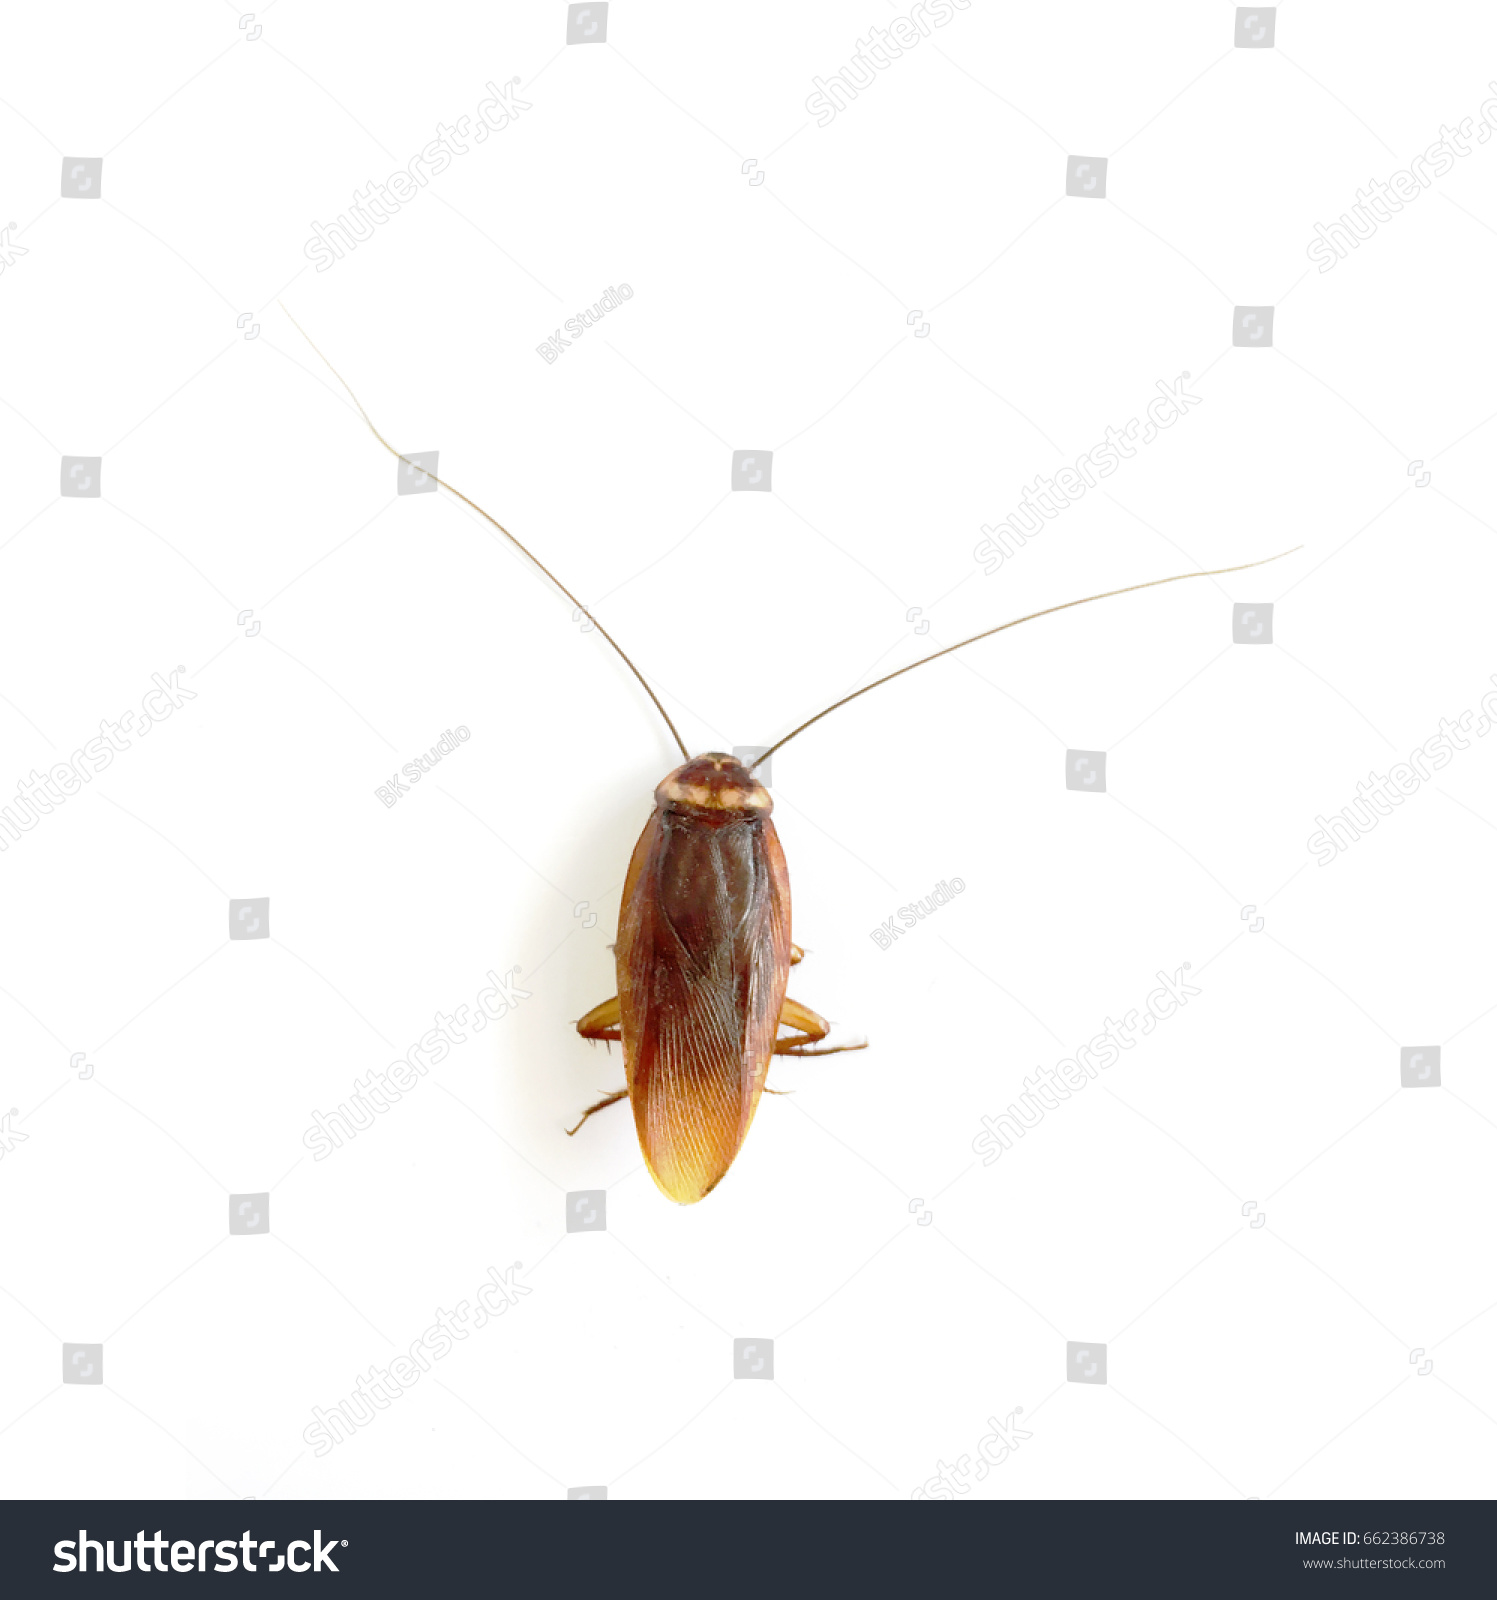 Roach Lying On White Background Stock Photo 662386738 - Shutterstock